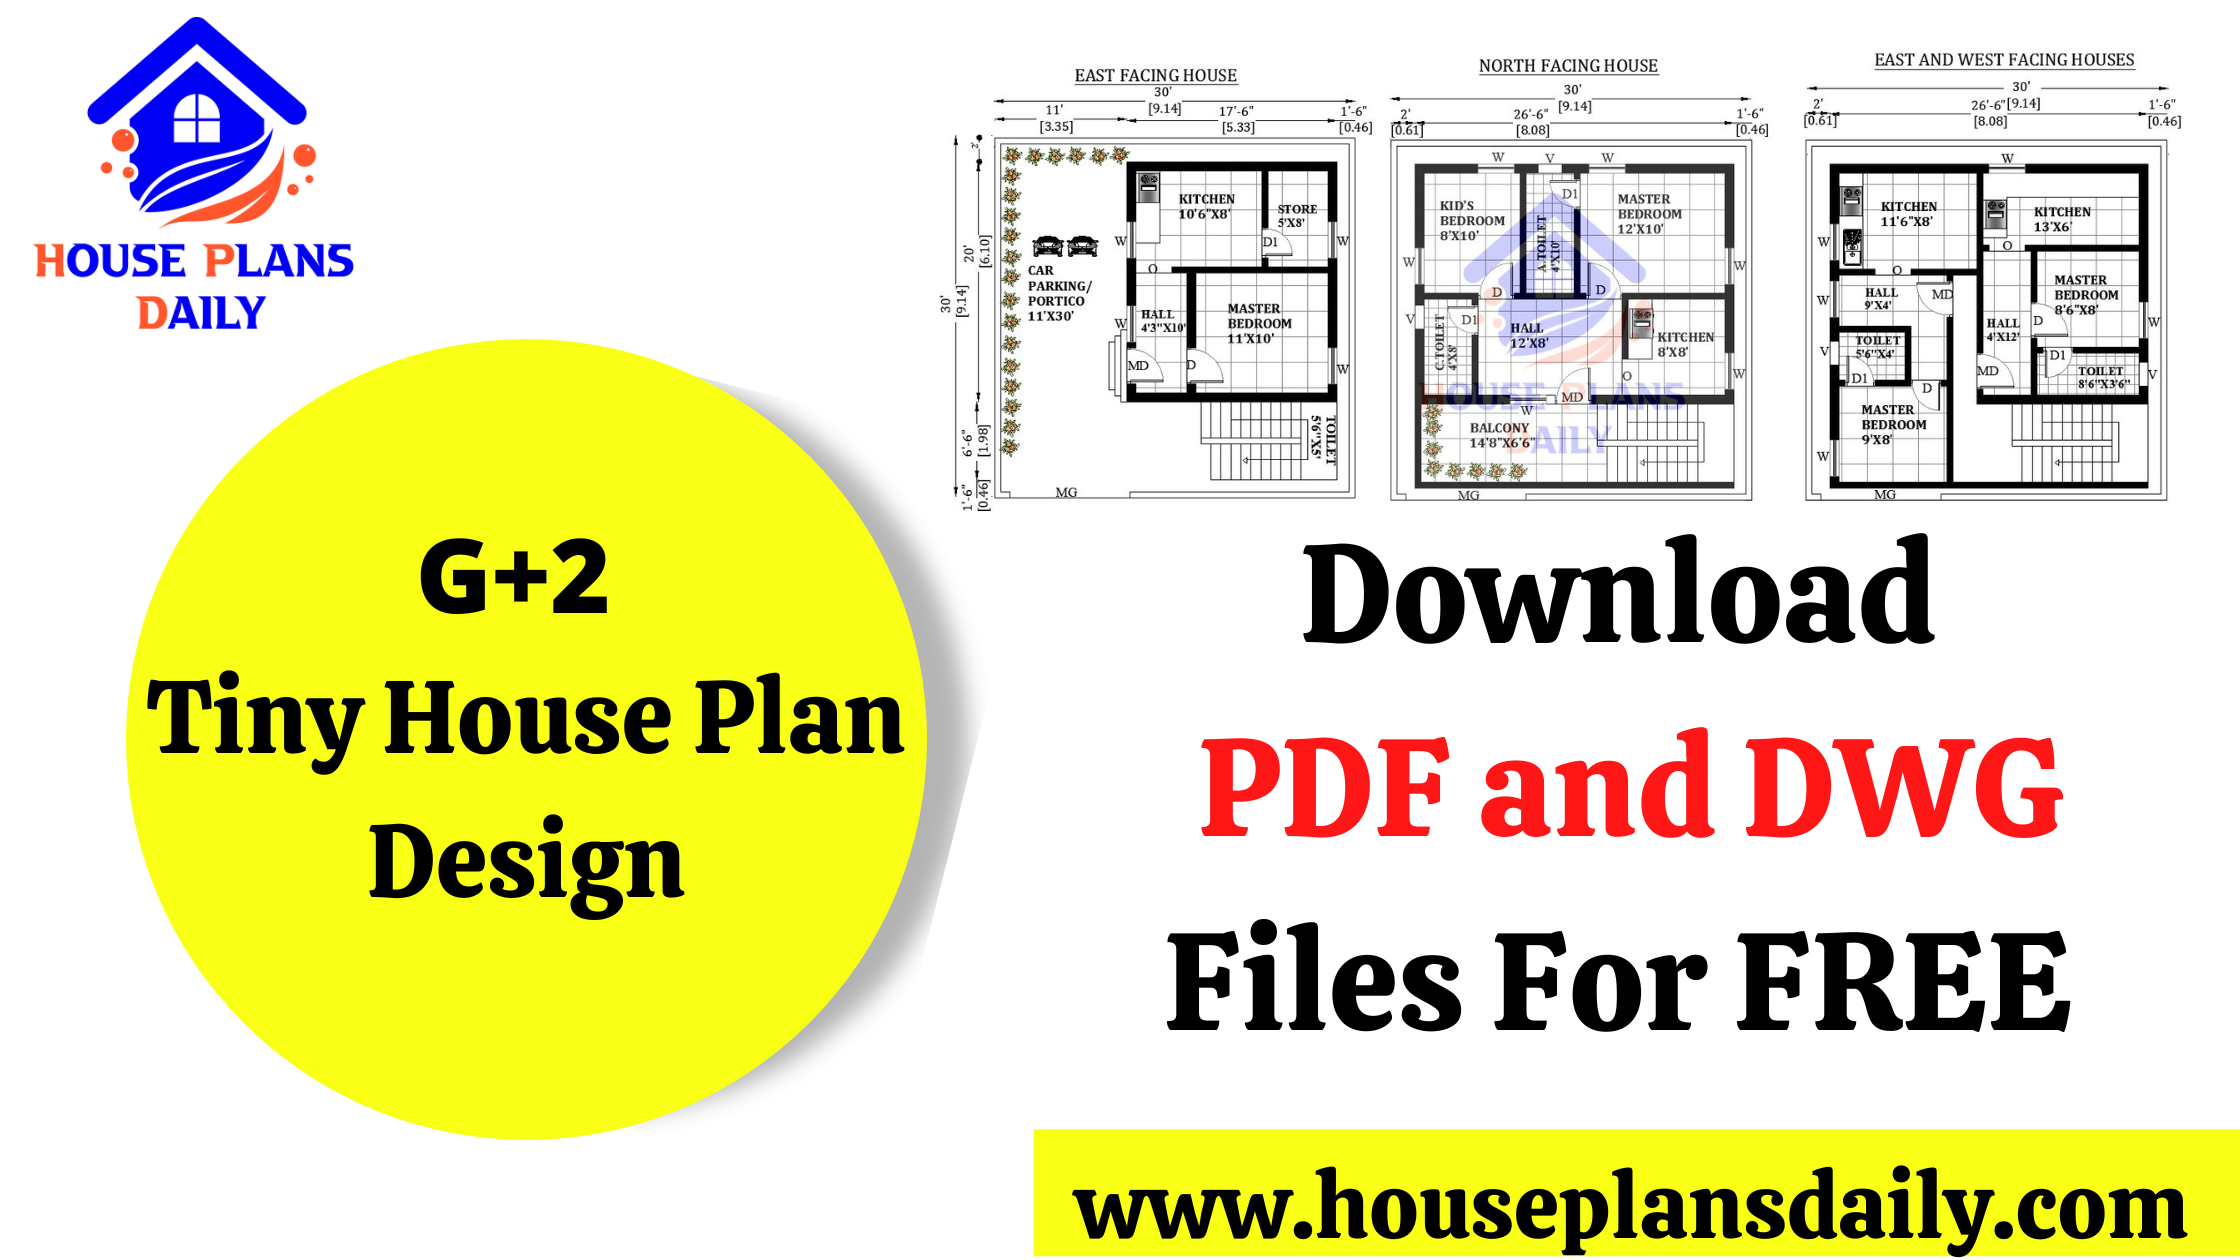 G+2 Tiny House Plan Design.